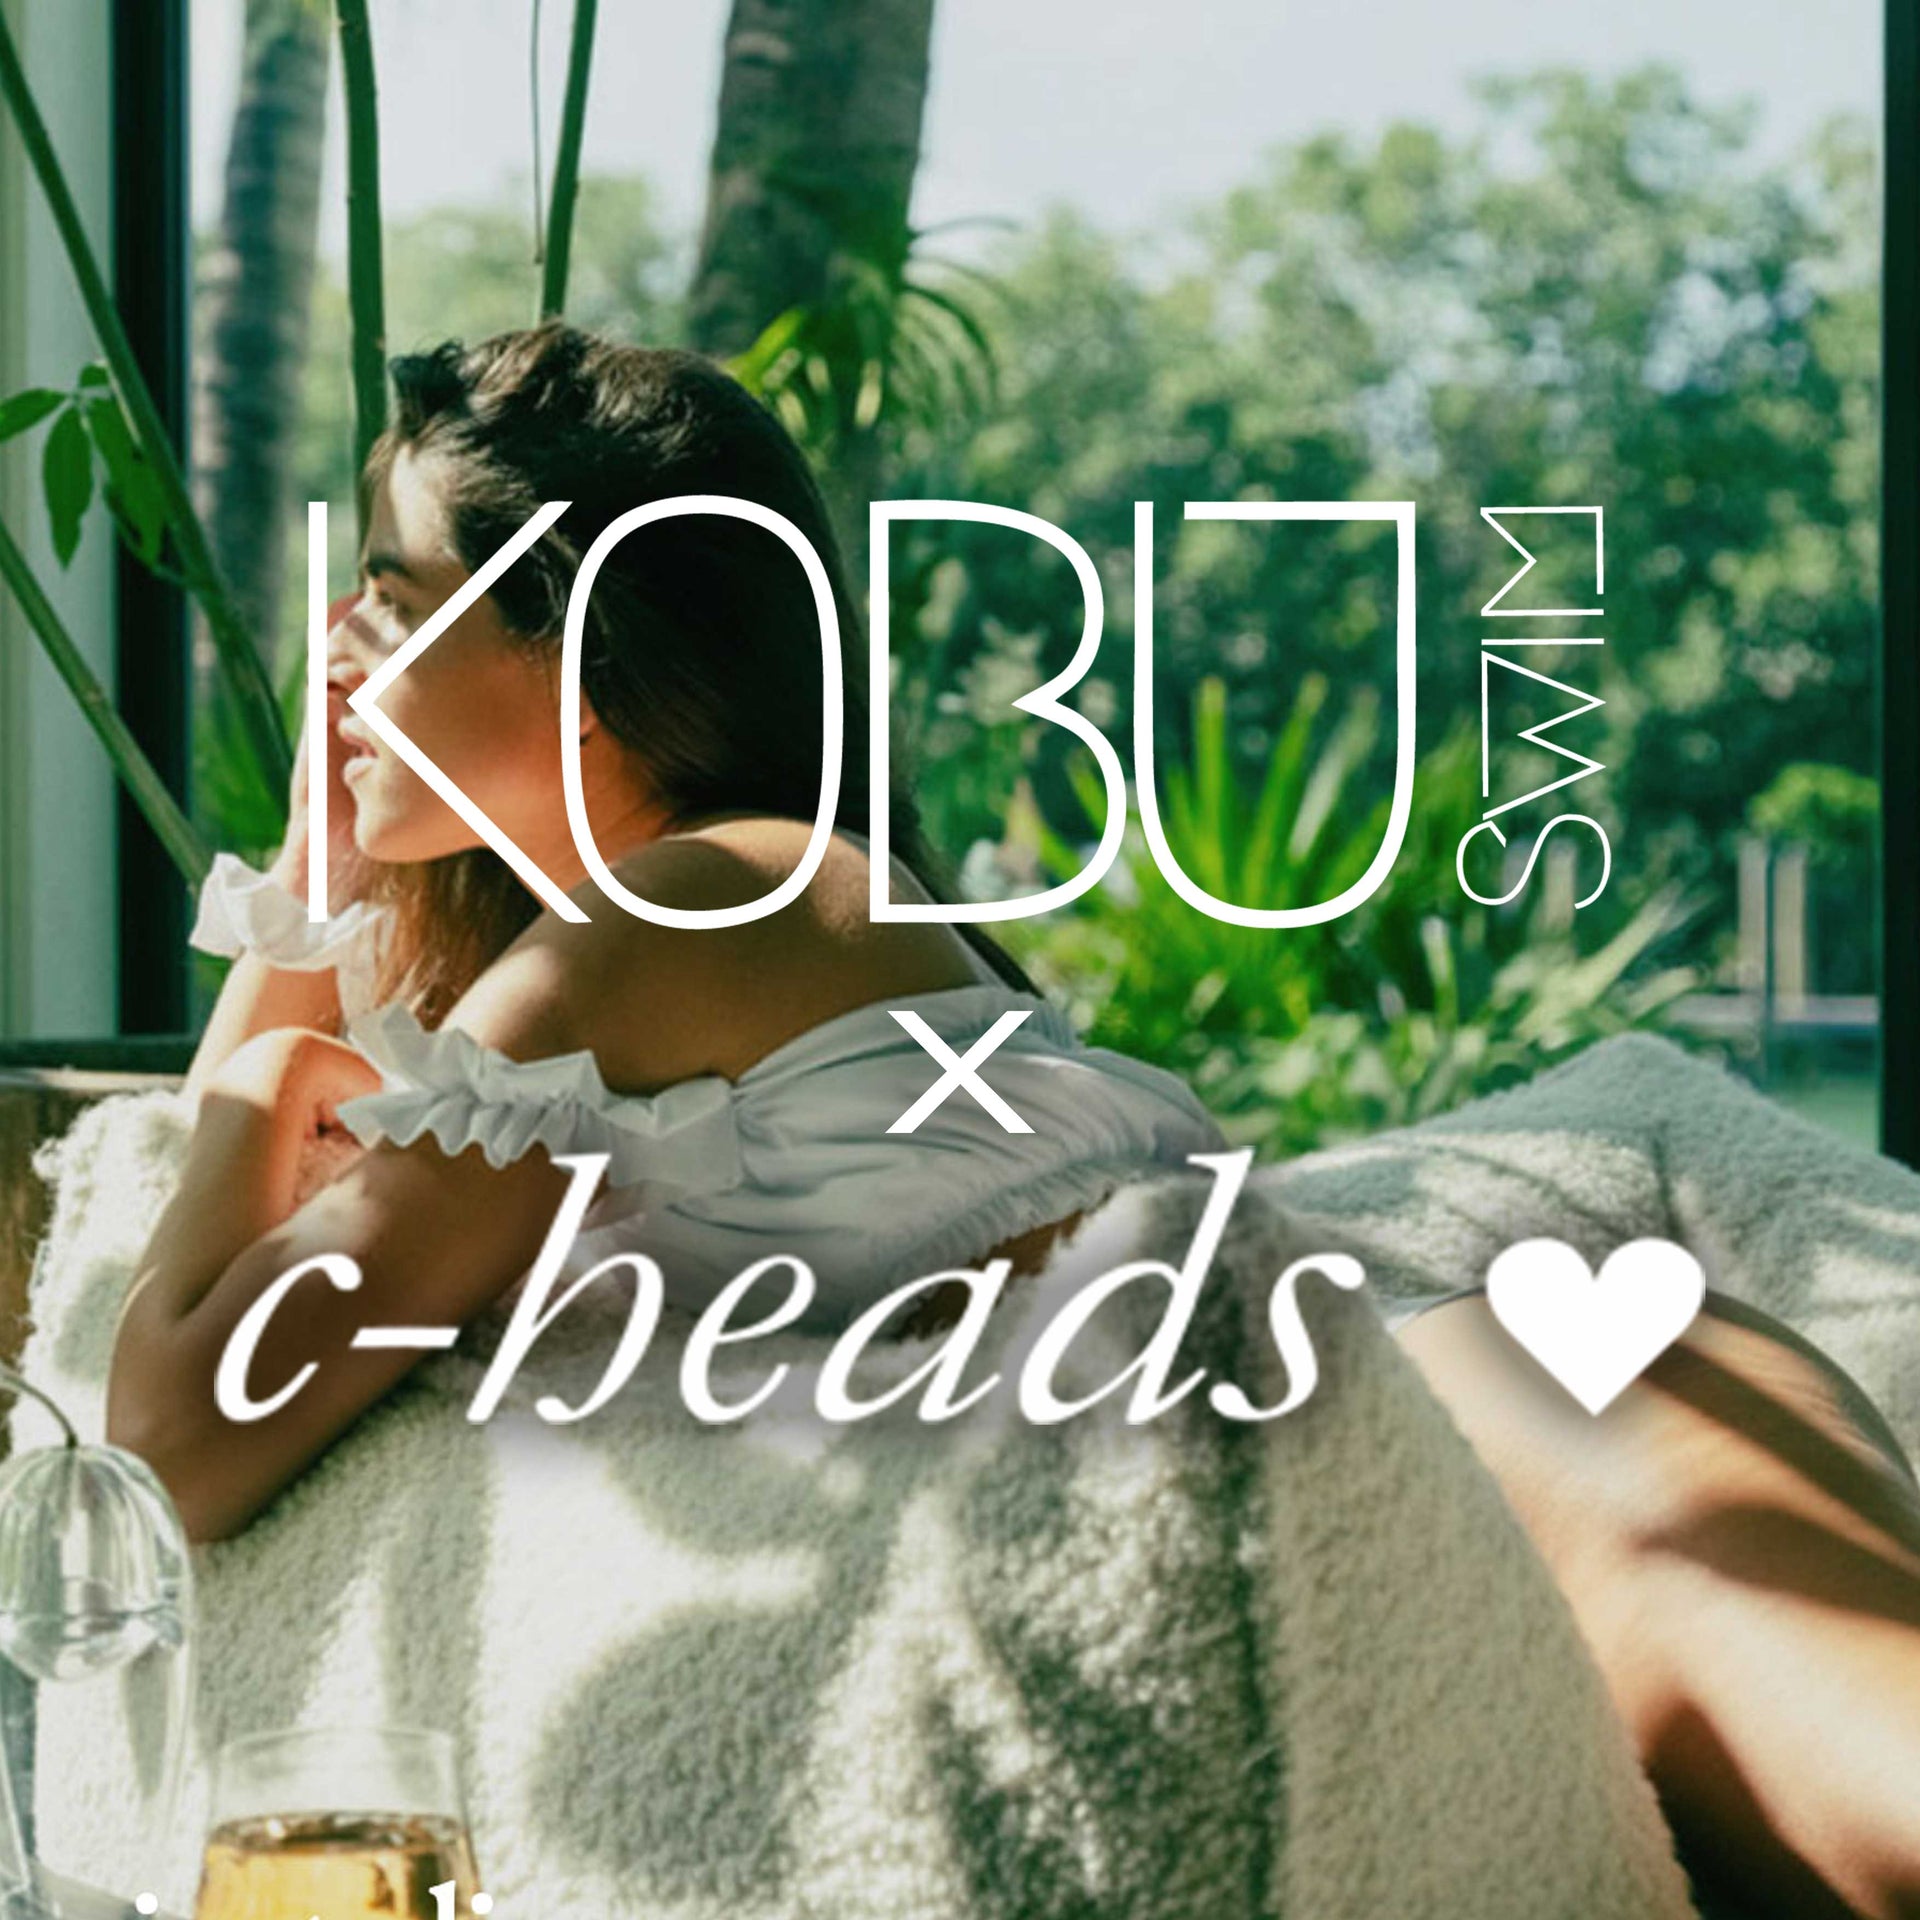 KOBU featured in C-Heads Magazine